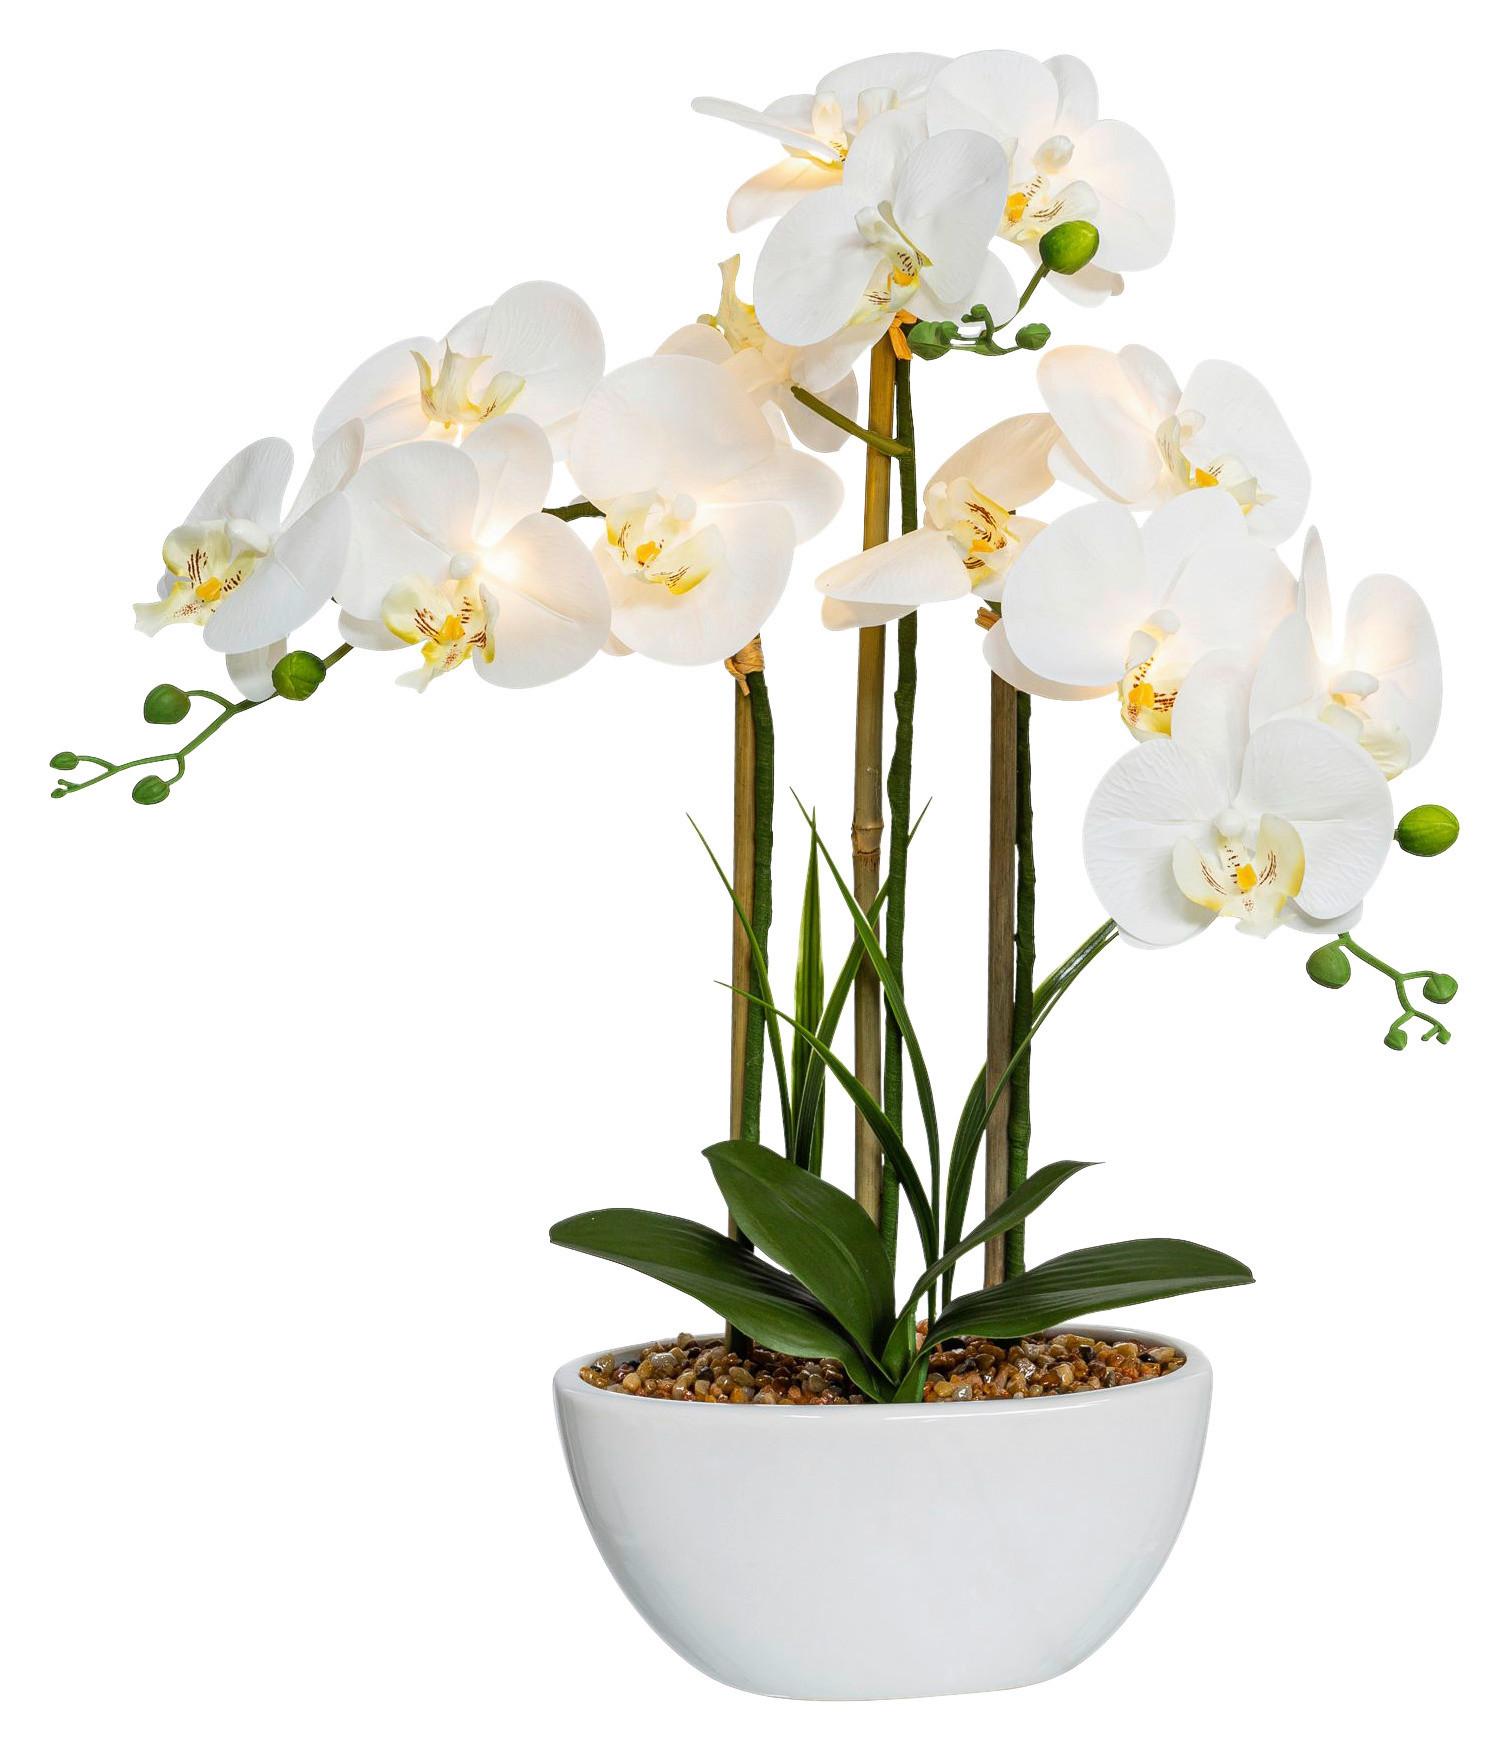 Umelá Rastlina Orchidea, 60cm, S Led Osvetl. - biela/krémová, Natur, plast/keramika (60cm) - Modern Living